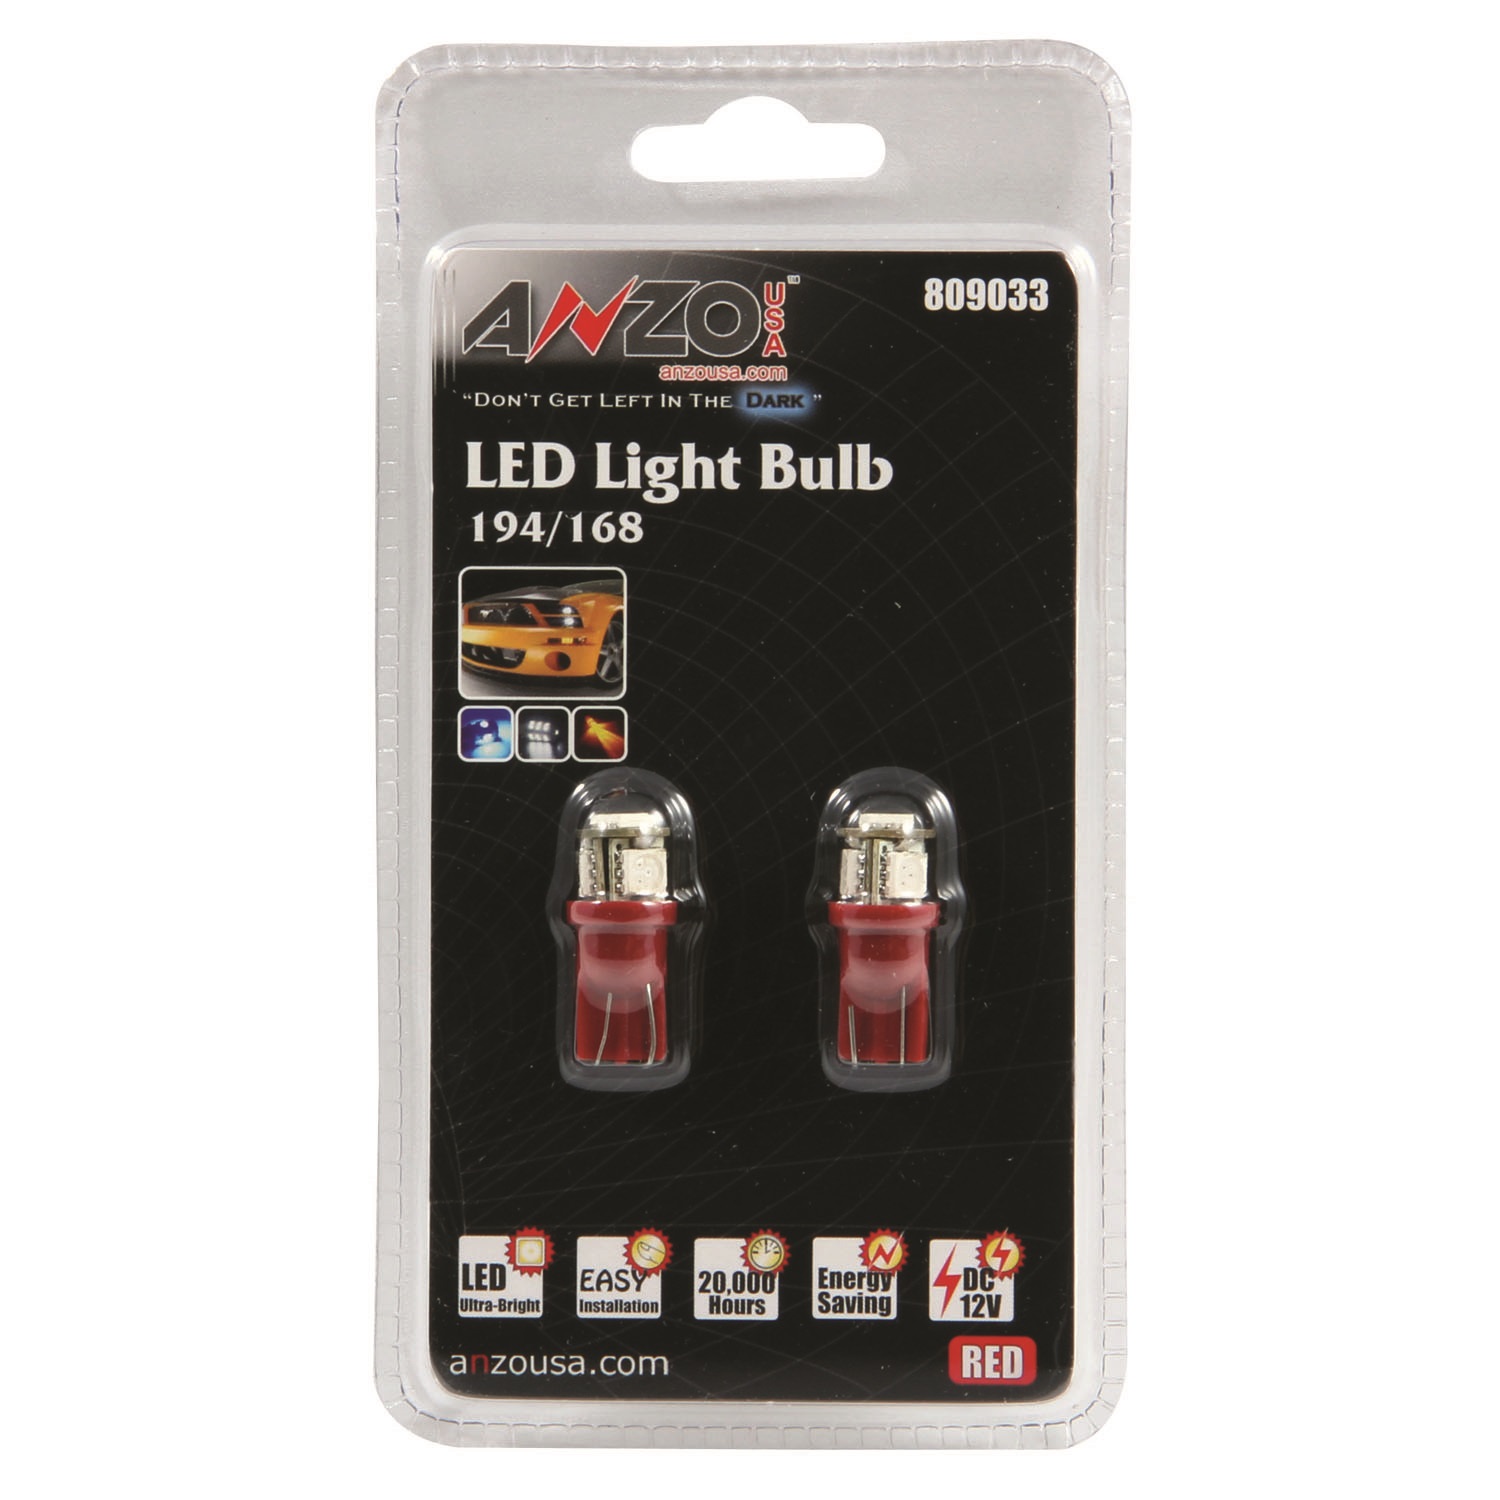 Anzo USA Anzo USA 809033 LED Replacement Bulb